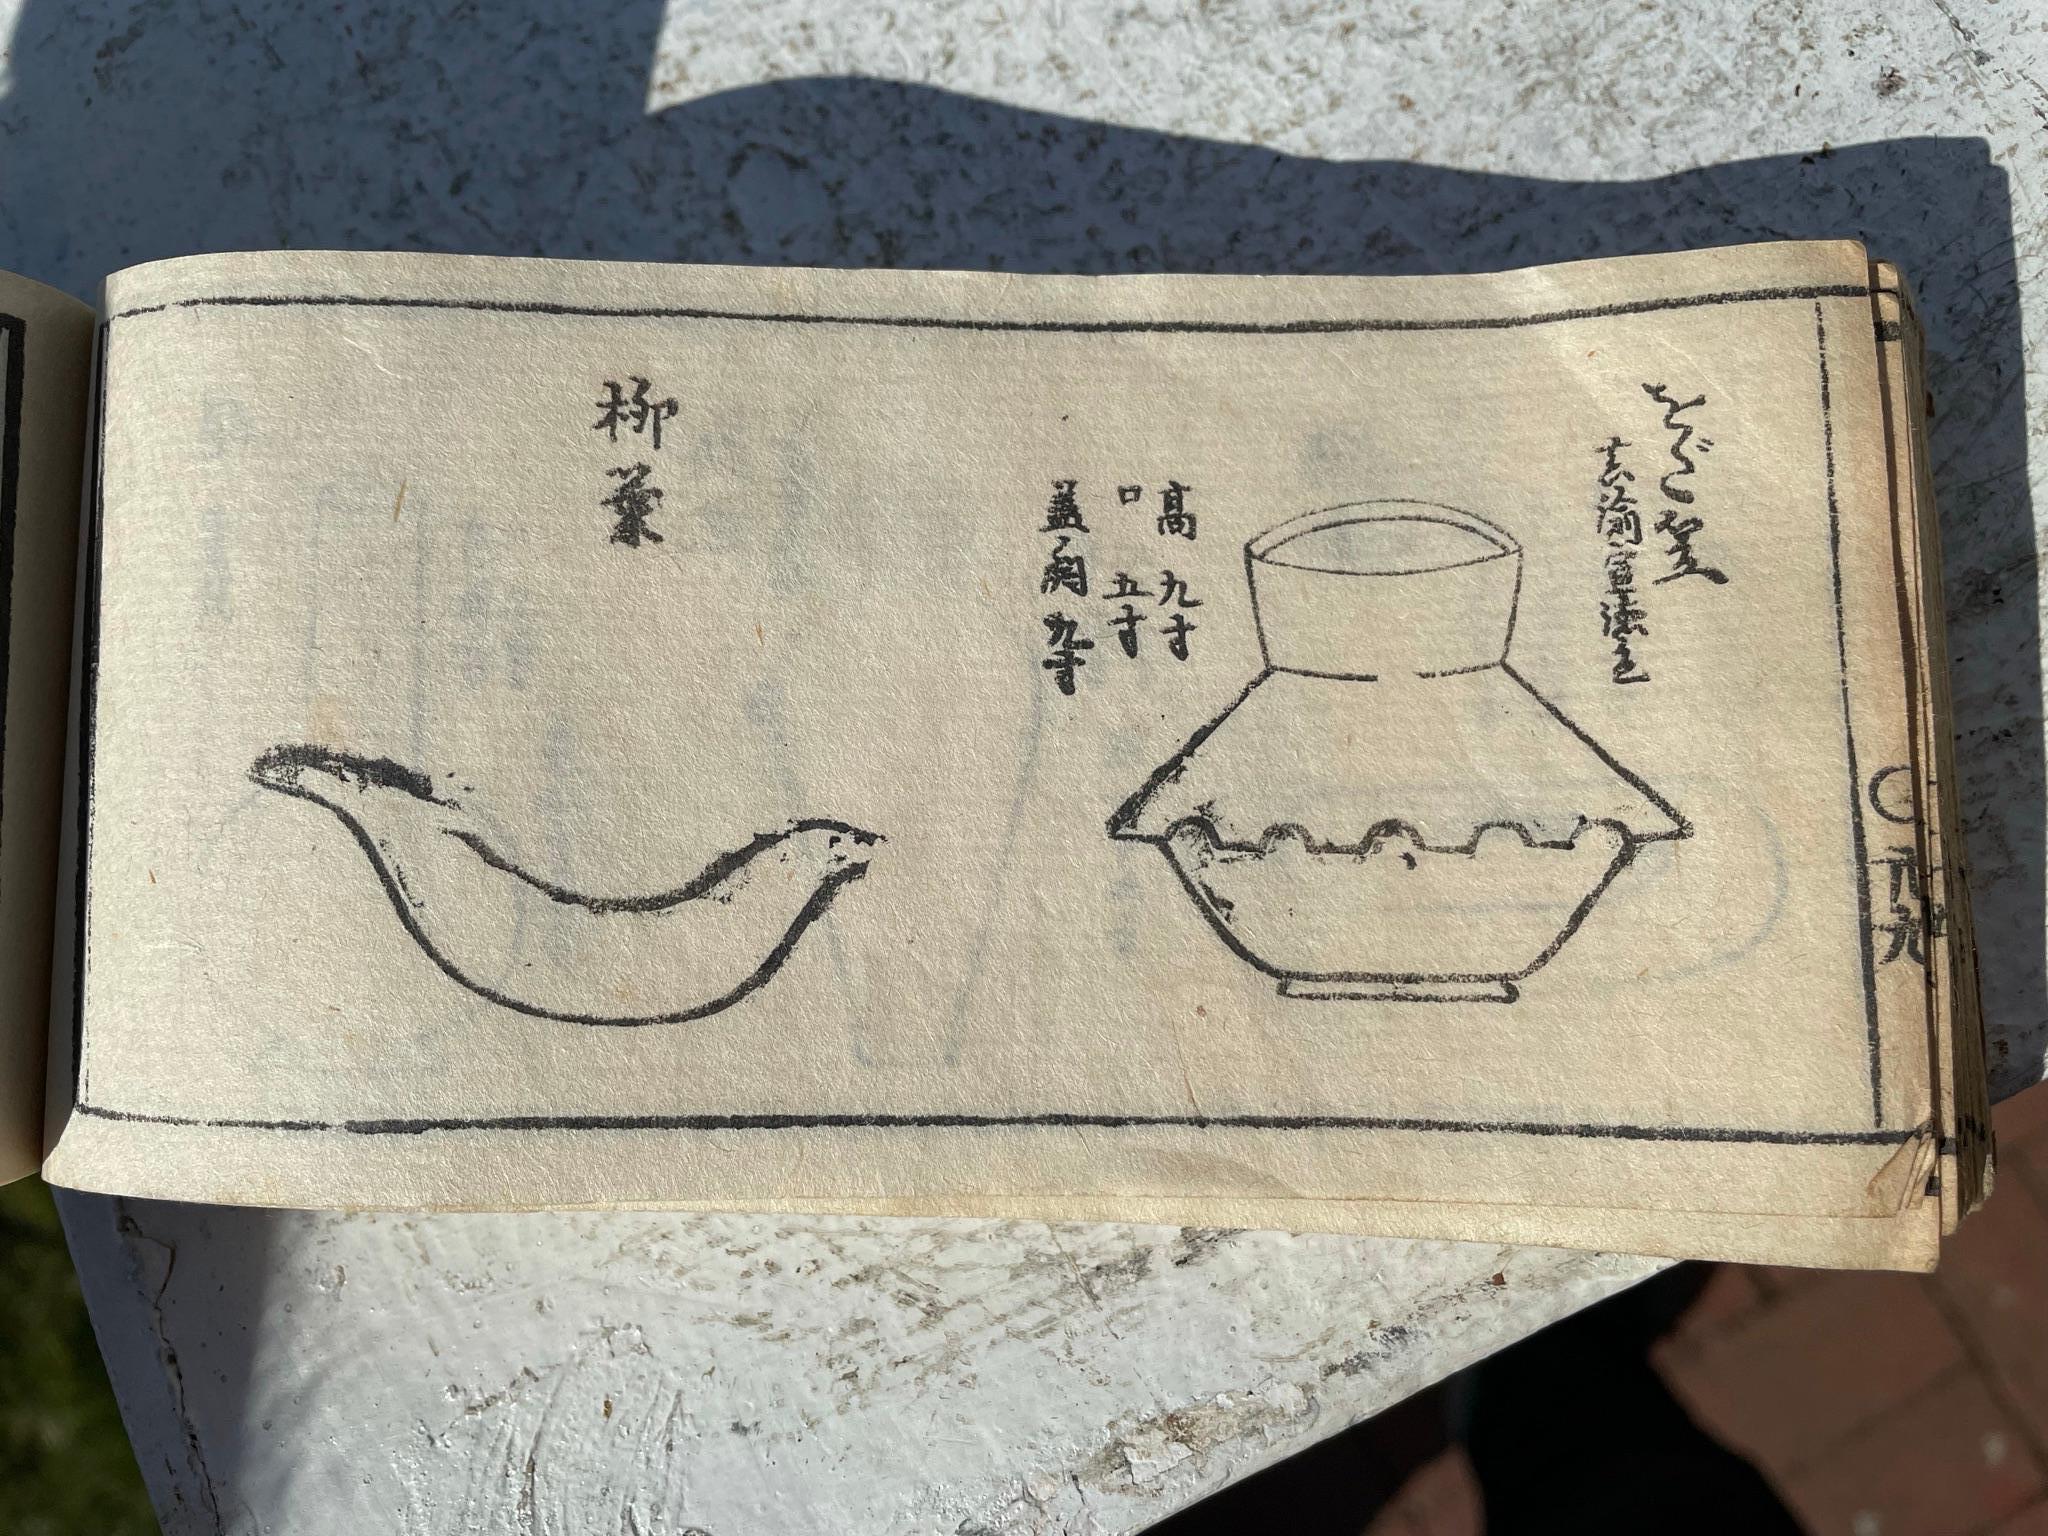 Japan Antique Tea Guide Chado Ceremony Woodblock Prints Book 1850 7